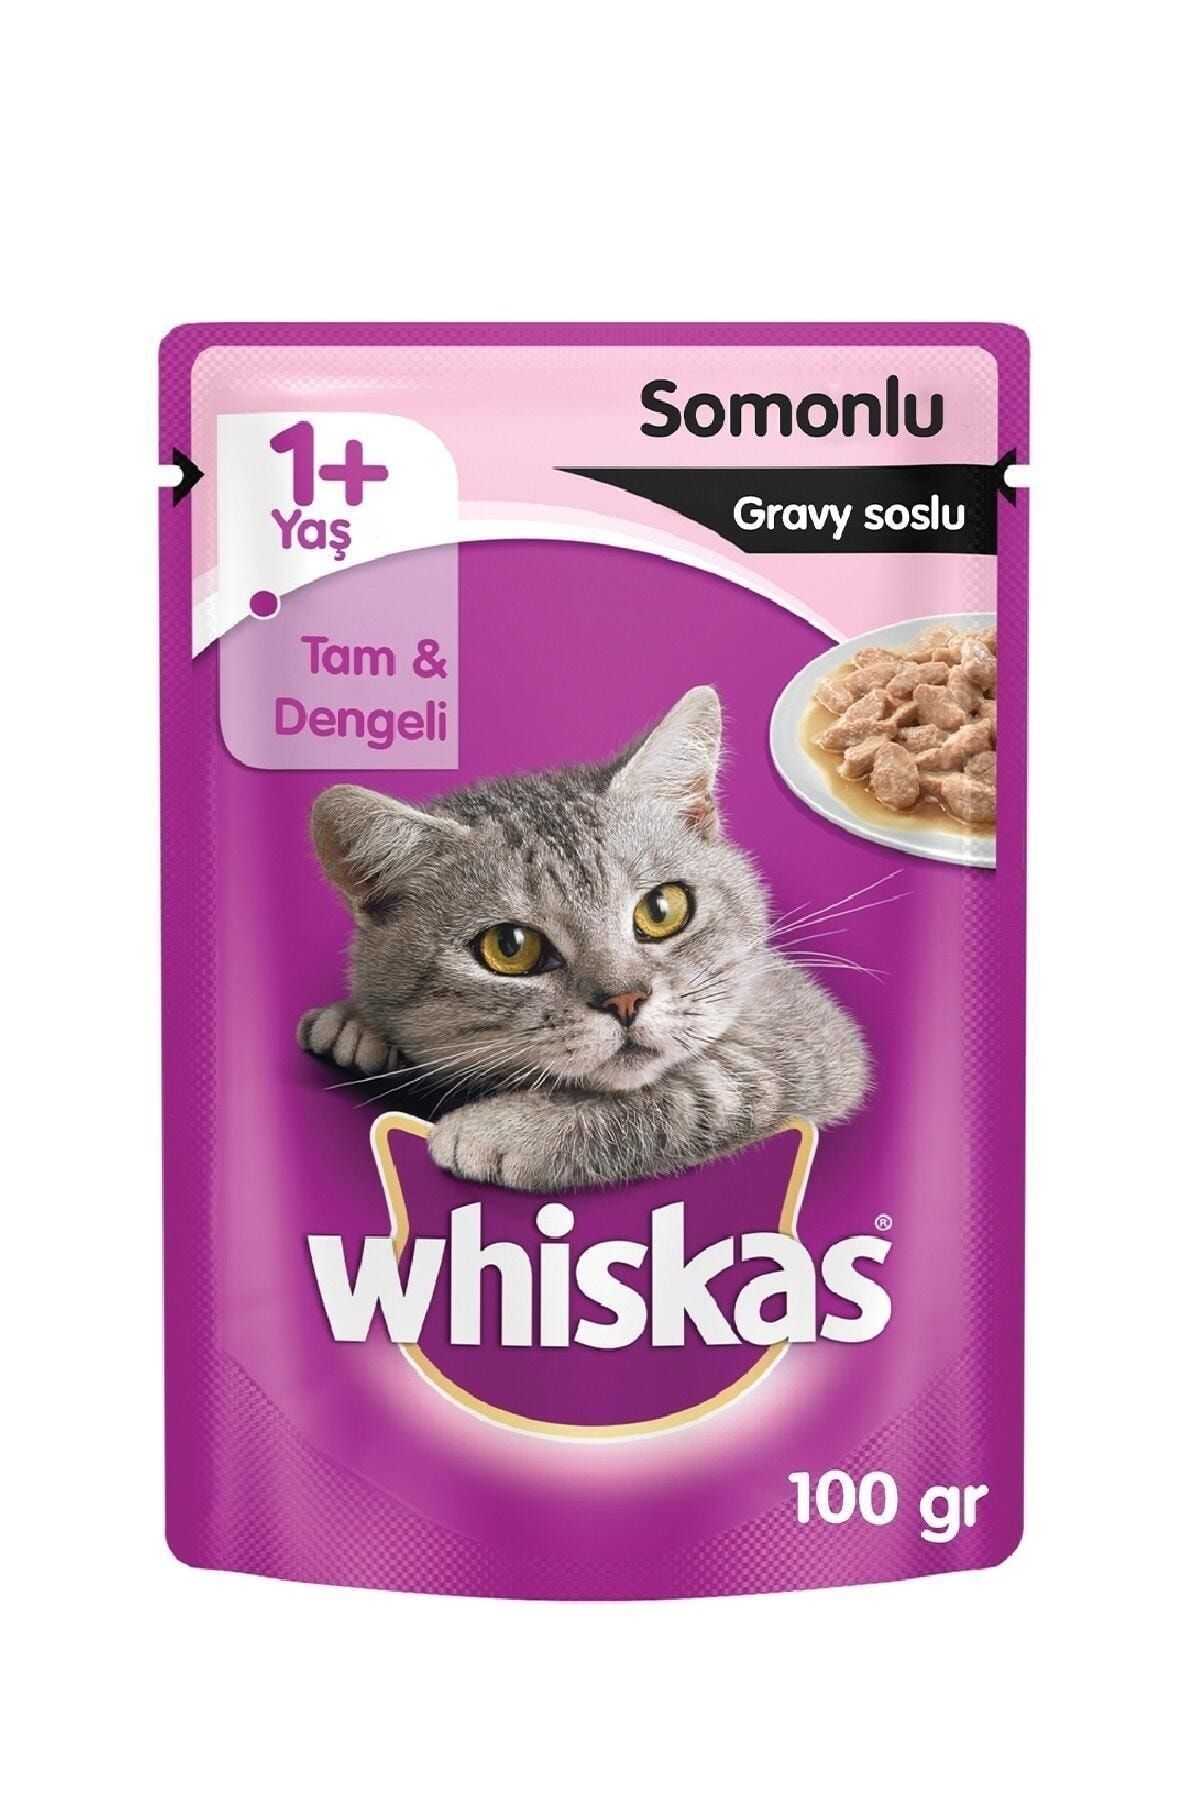 Whiskas Pouch Somonlu Gravy Soslu 100 Gr